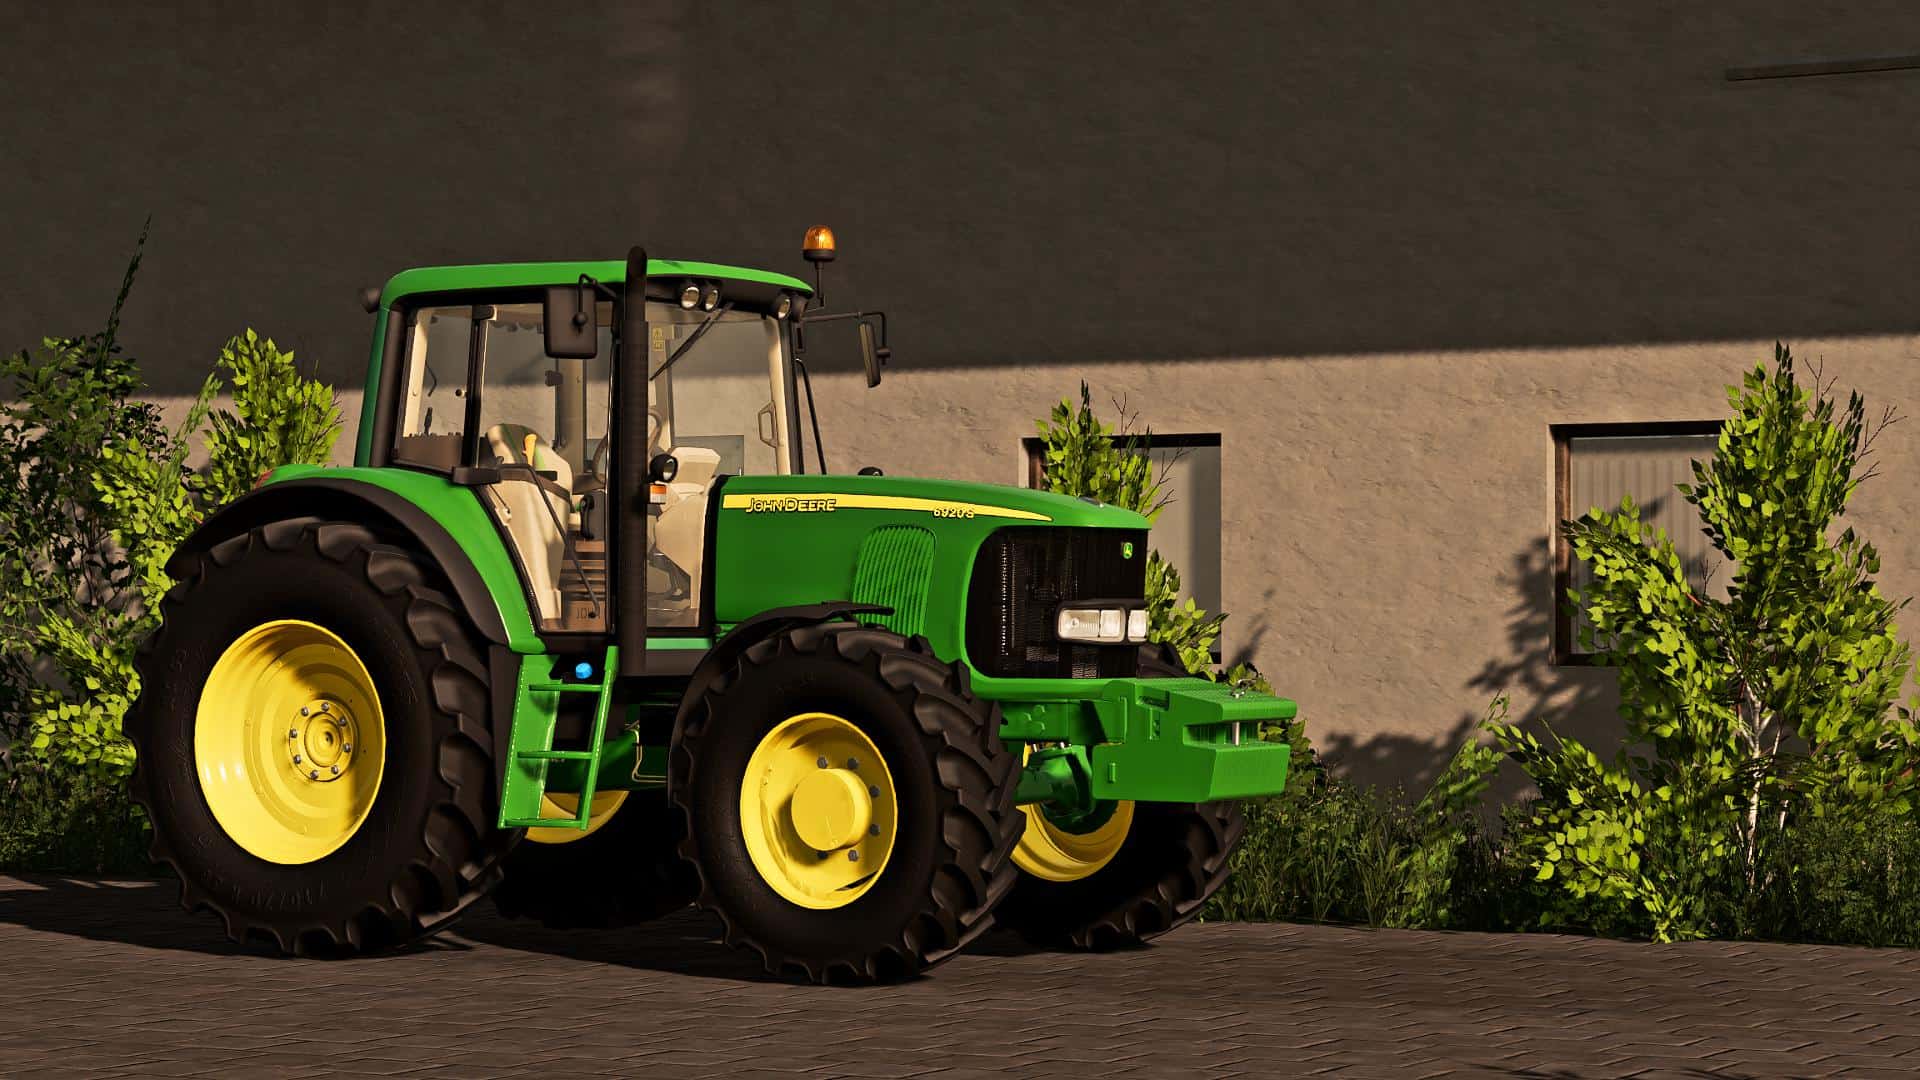 Fs19 John Deere 60207020 Premium V200 11 Farming Simulator 19